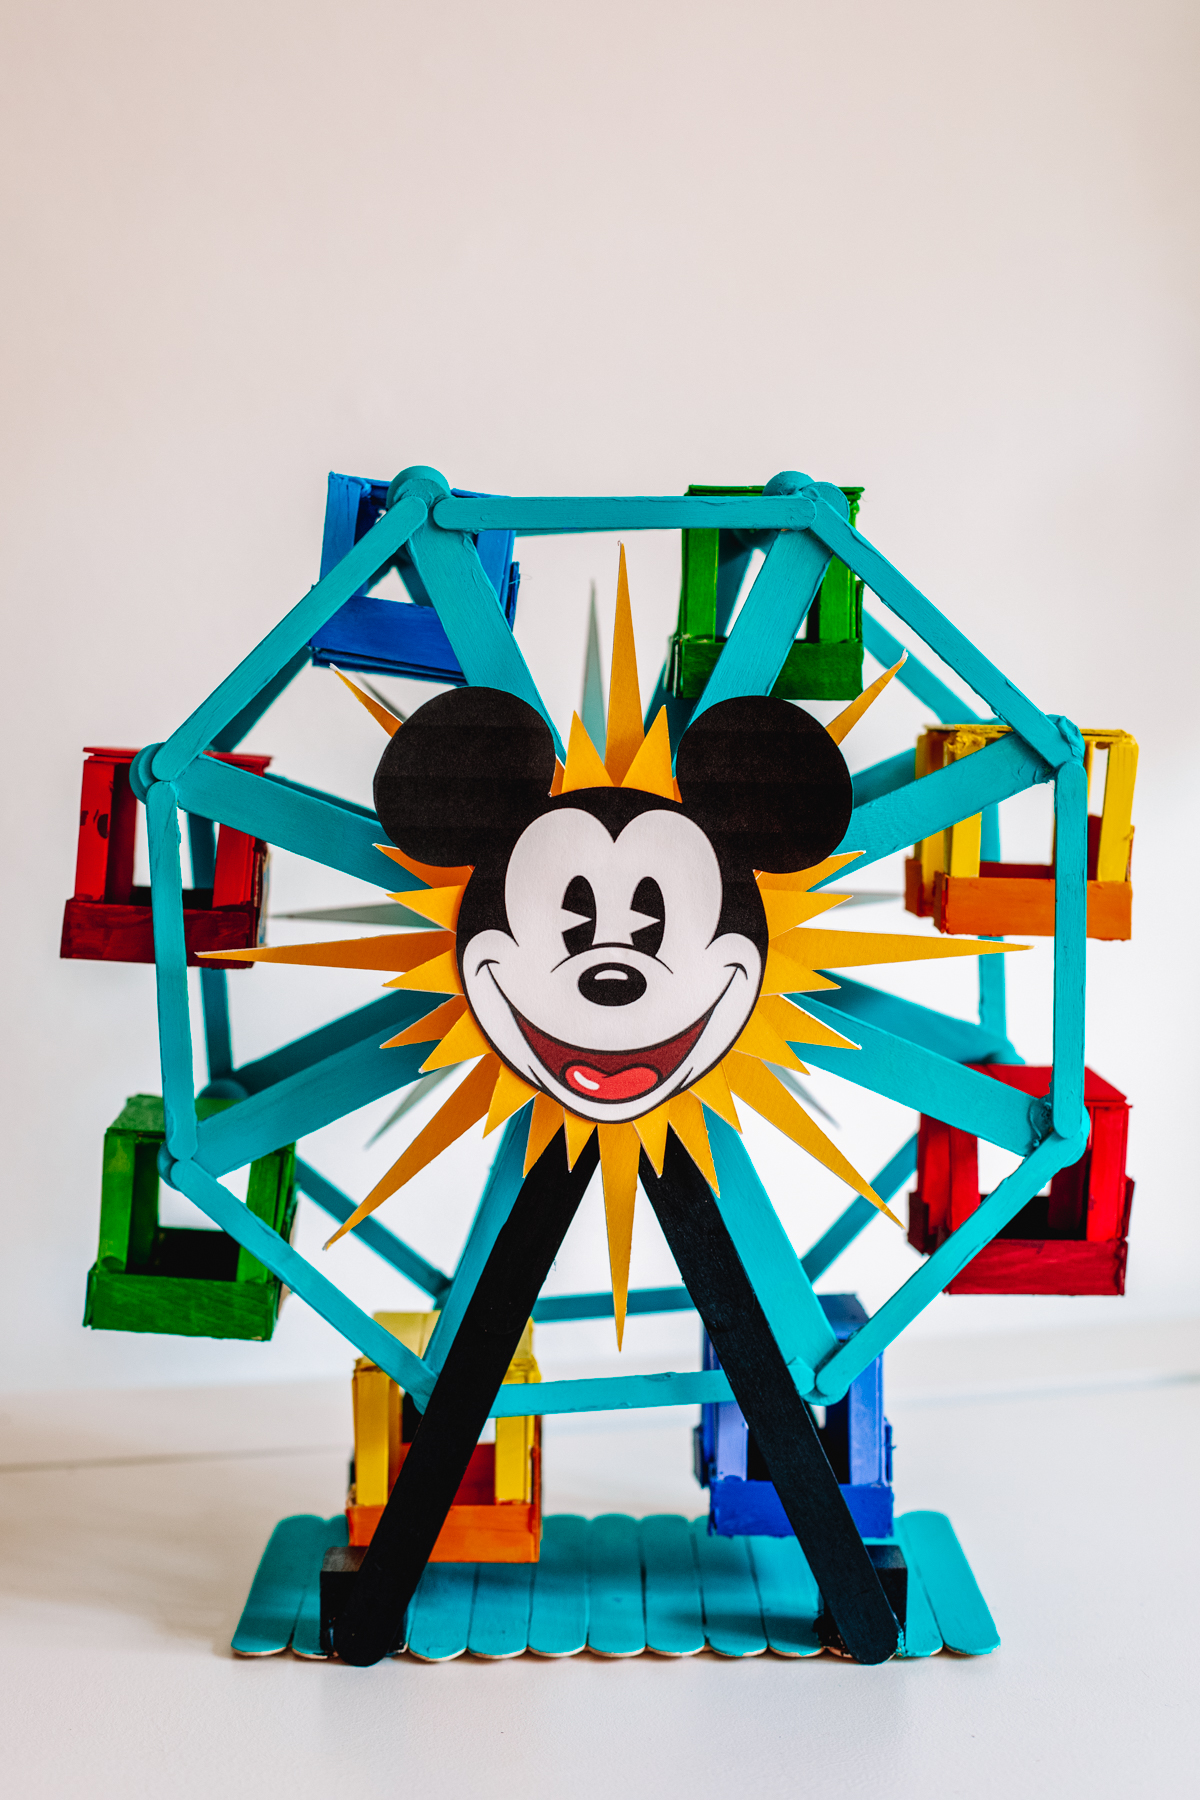 build a model ferris wheel